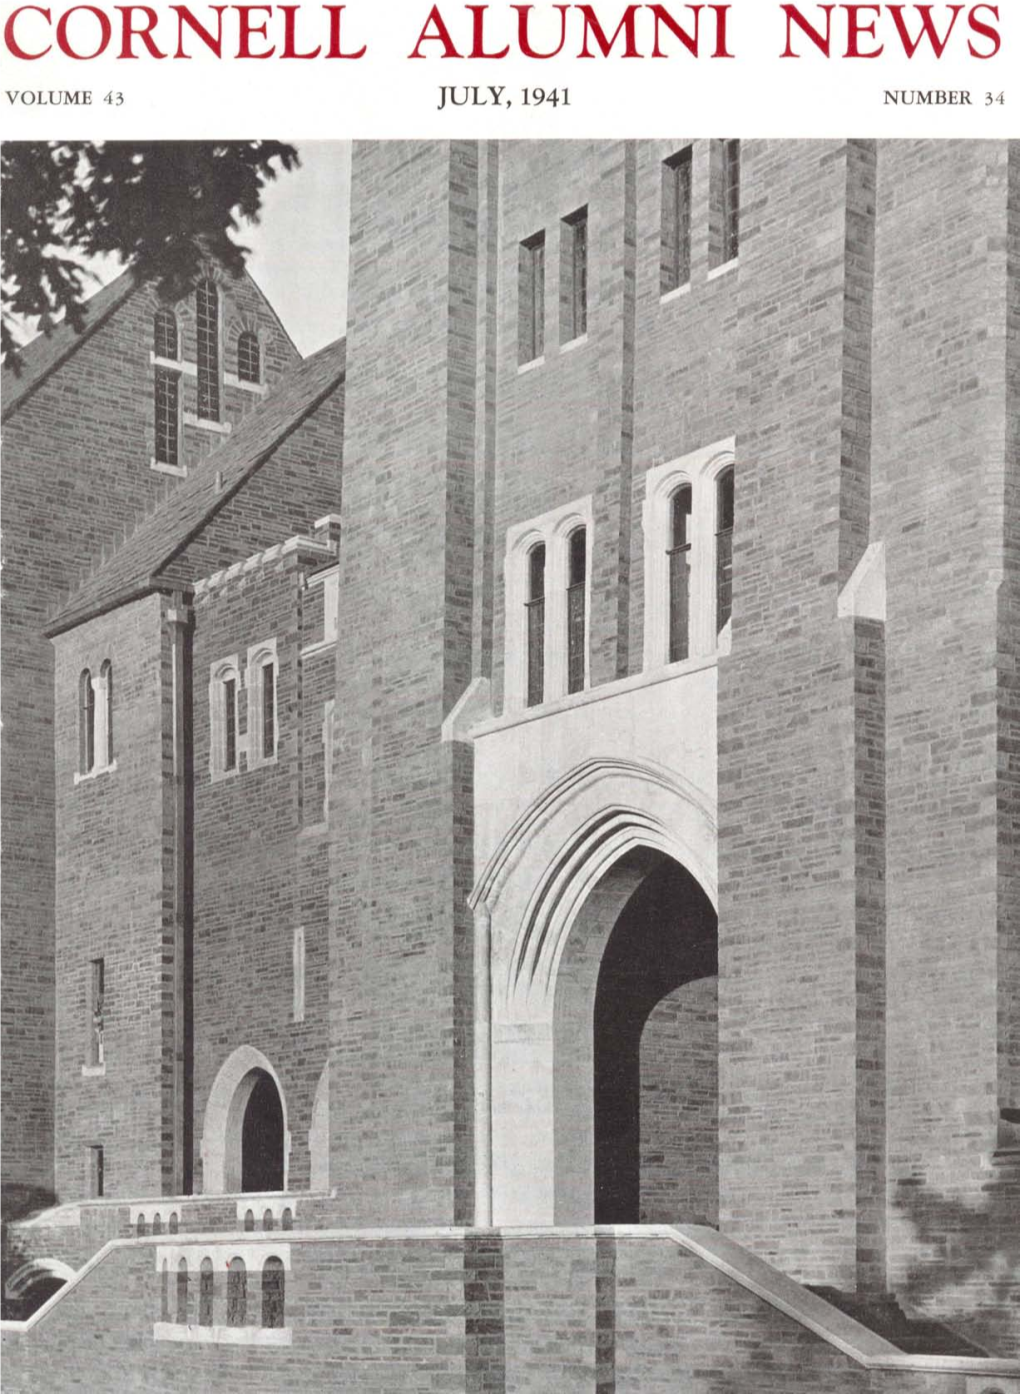 Cornell Alumni News Volume 43 July, 1941 Number 34